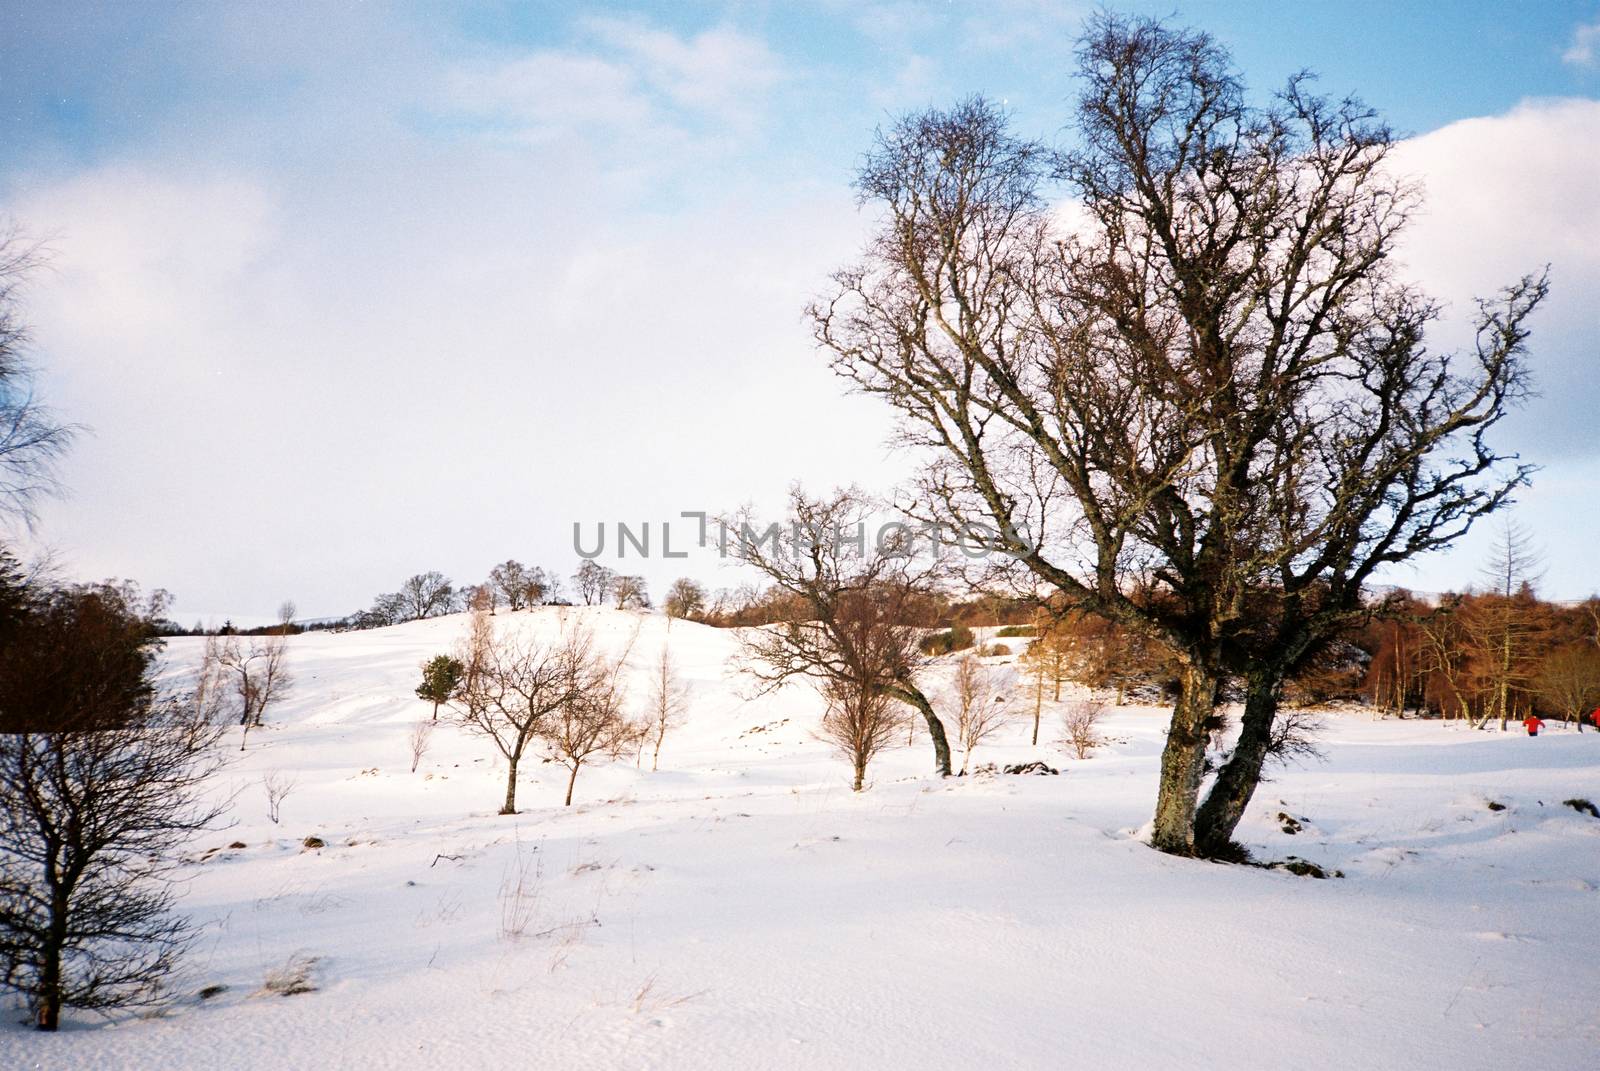 Color film image of winter scenery in Kingussie